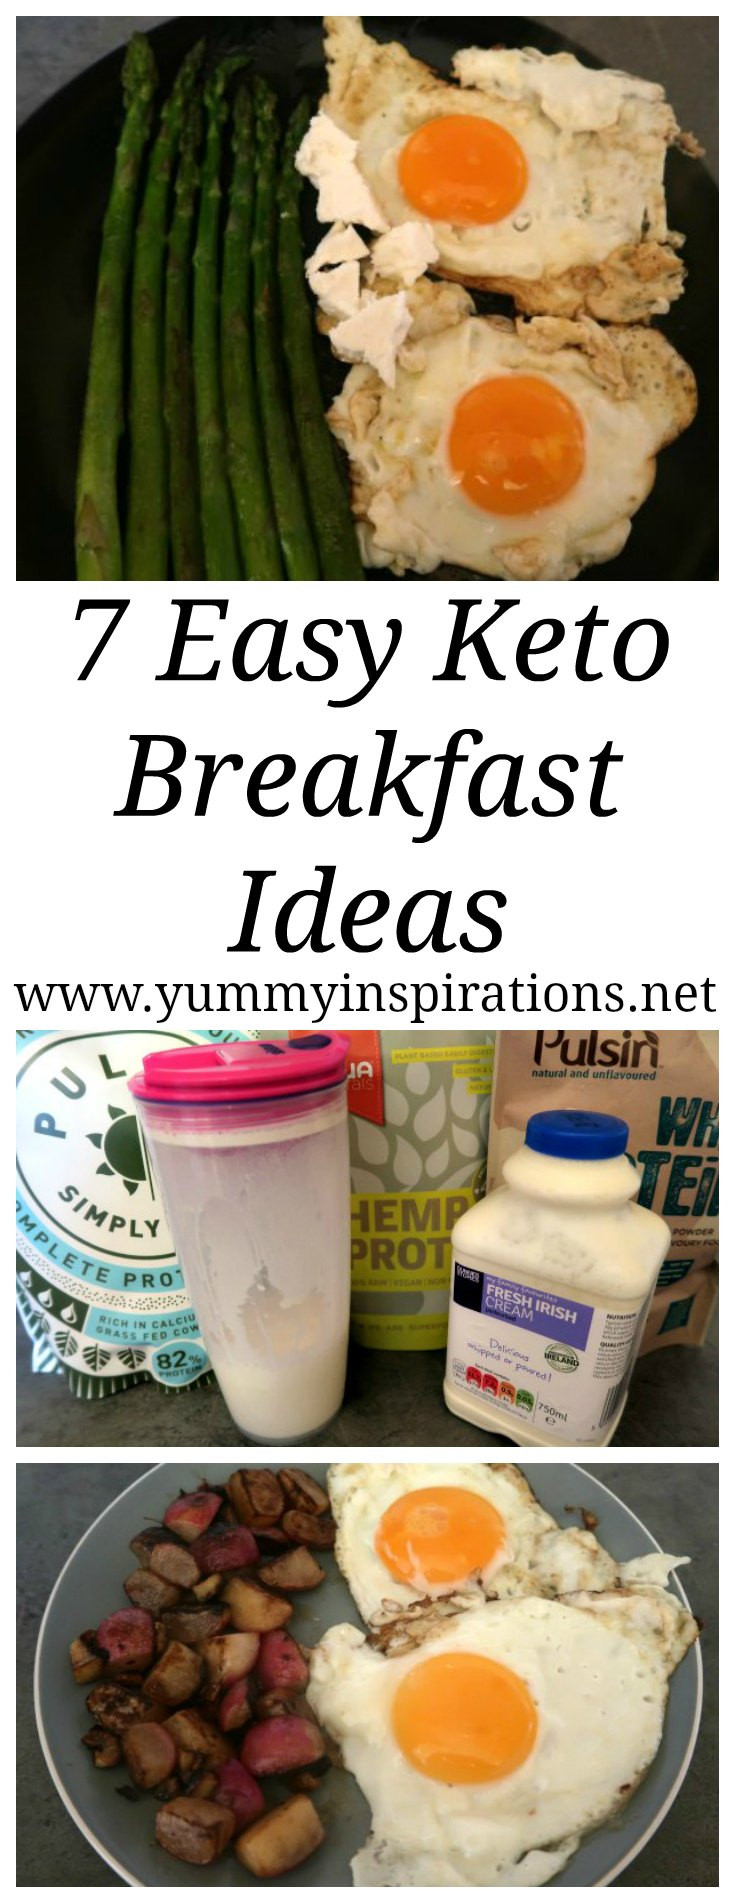 Easy Keto Breakfast On The Go
 7 Easy Keto Breakfast Ideas Low Carb & Ketogenic Diet